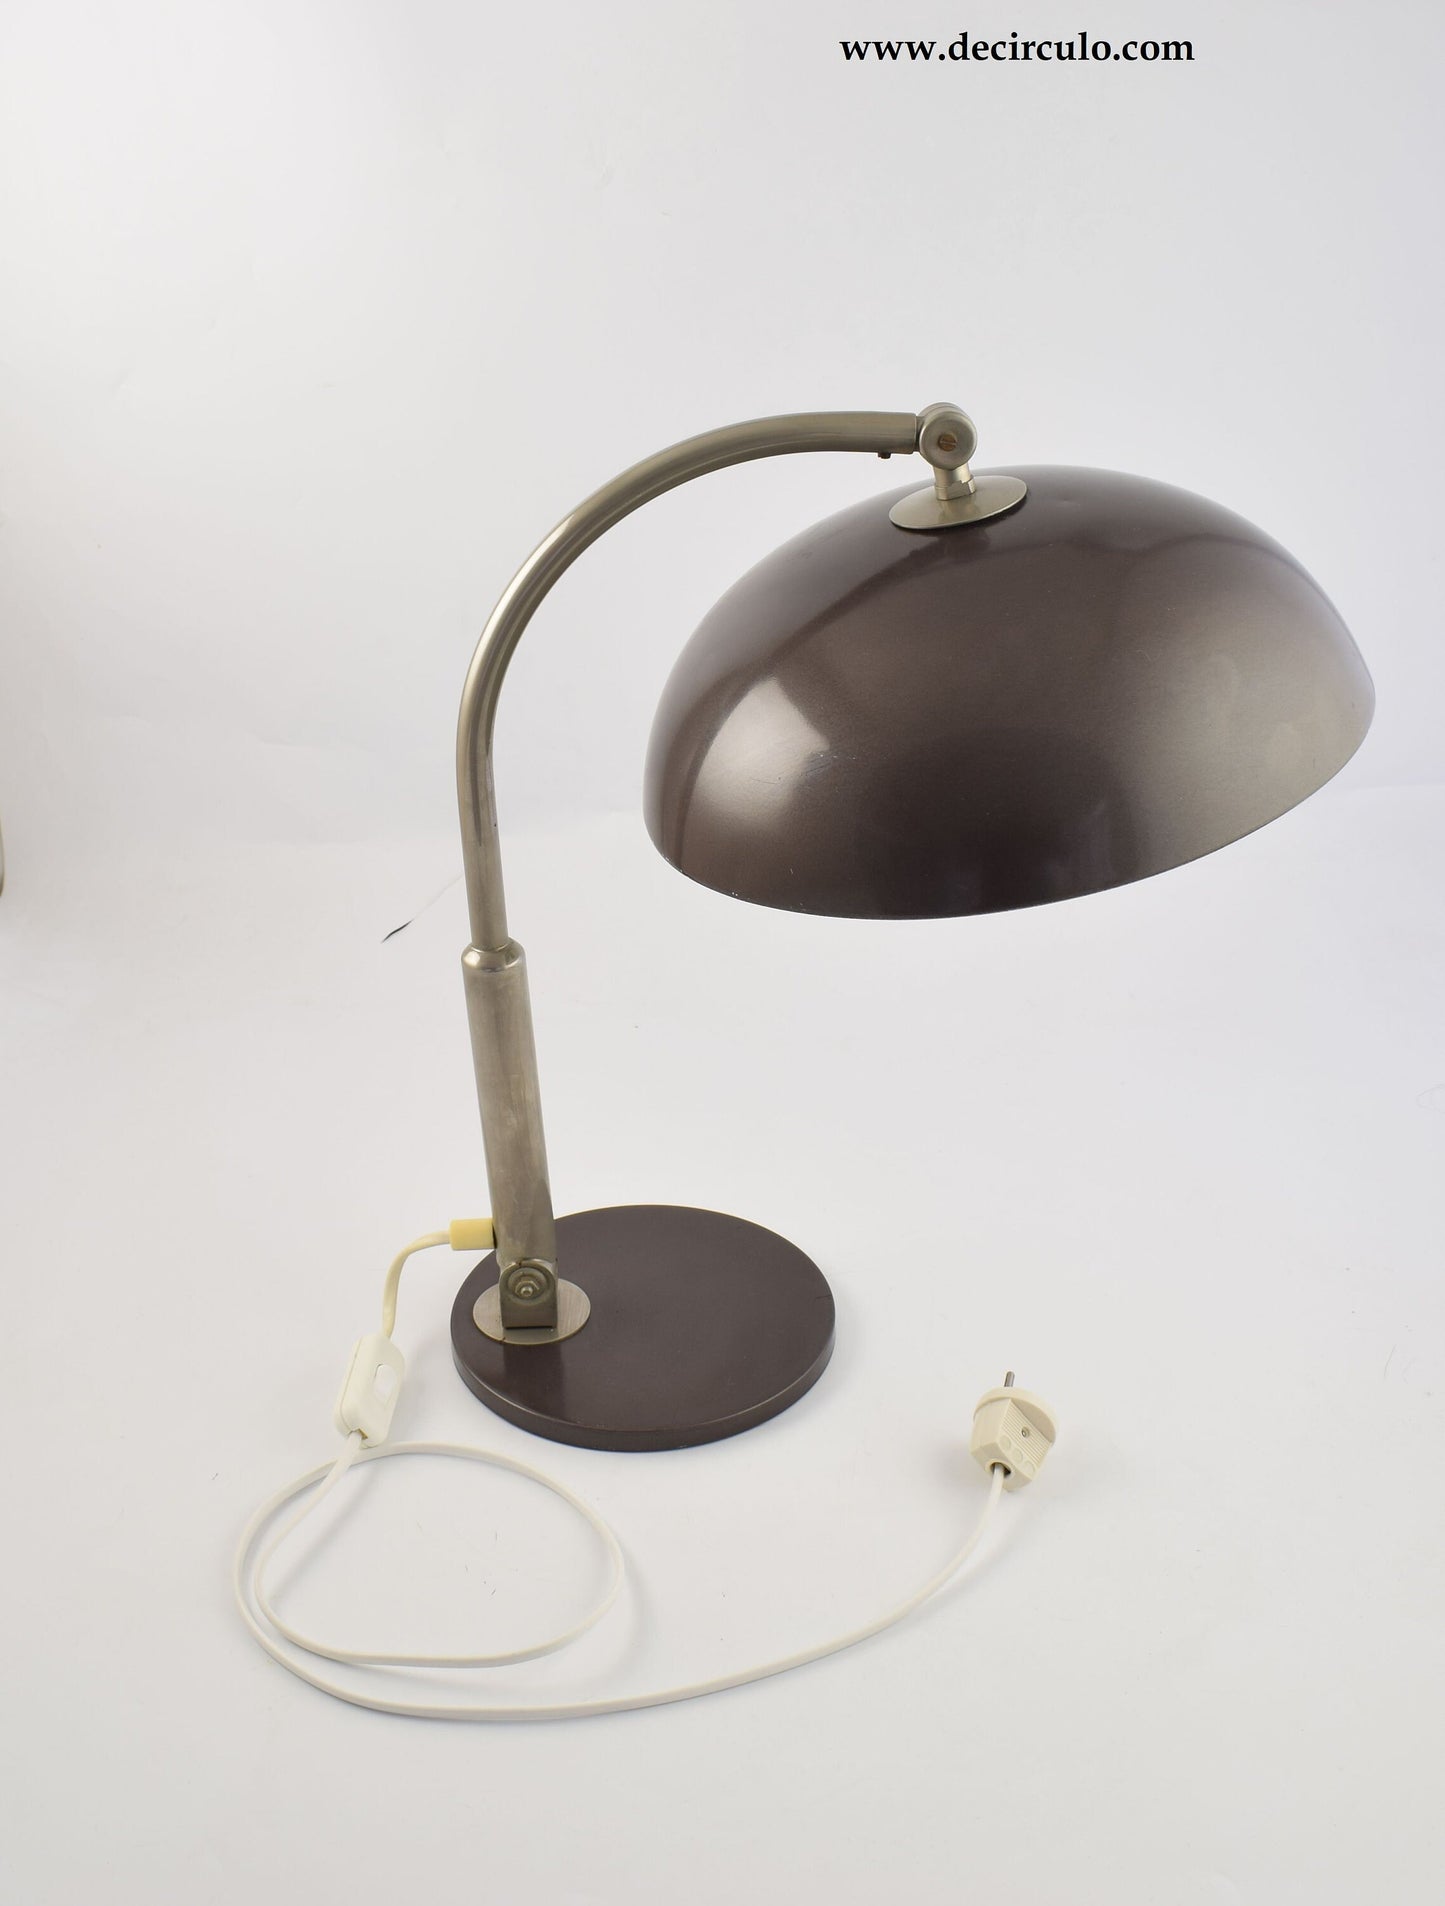 Hala Desk lamp Model 144 designed Busquet, famous dark grayish brown and chrome design table light from The Netherlands